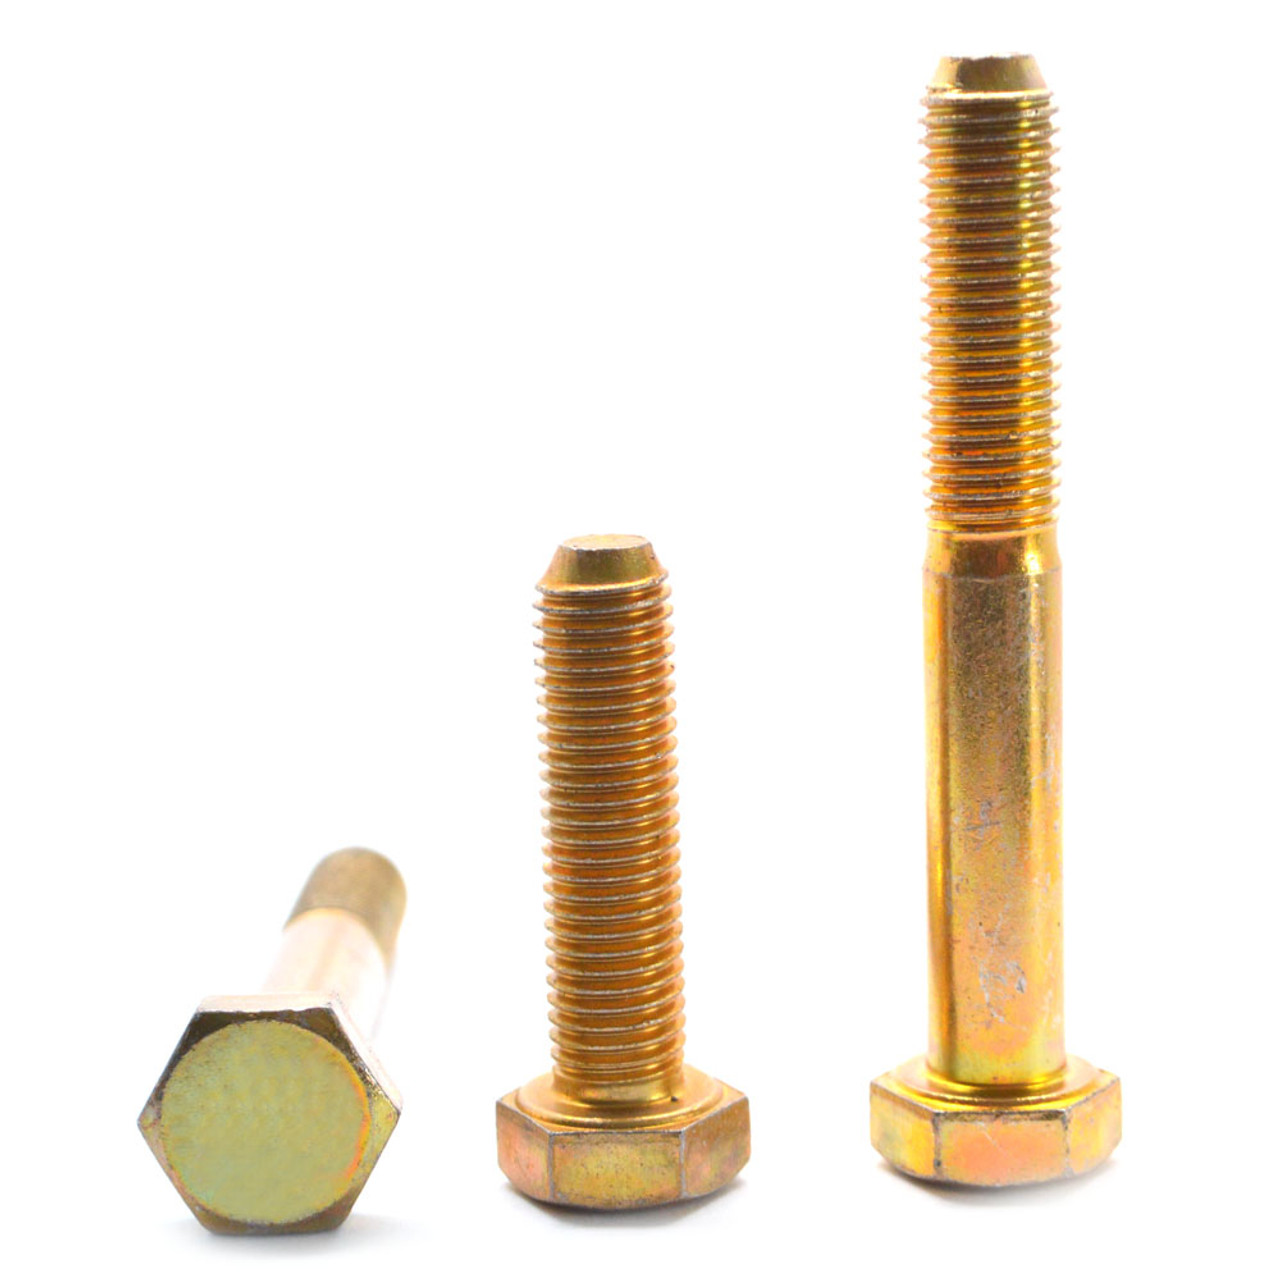 M30 x 3.50 x 140 MM Coarse Thread DIN 931 / ISO 4014 Class 10.9 Hex Cap Screw (Bolt) Alloy Steel Yellow Zinc Plated